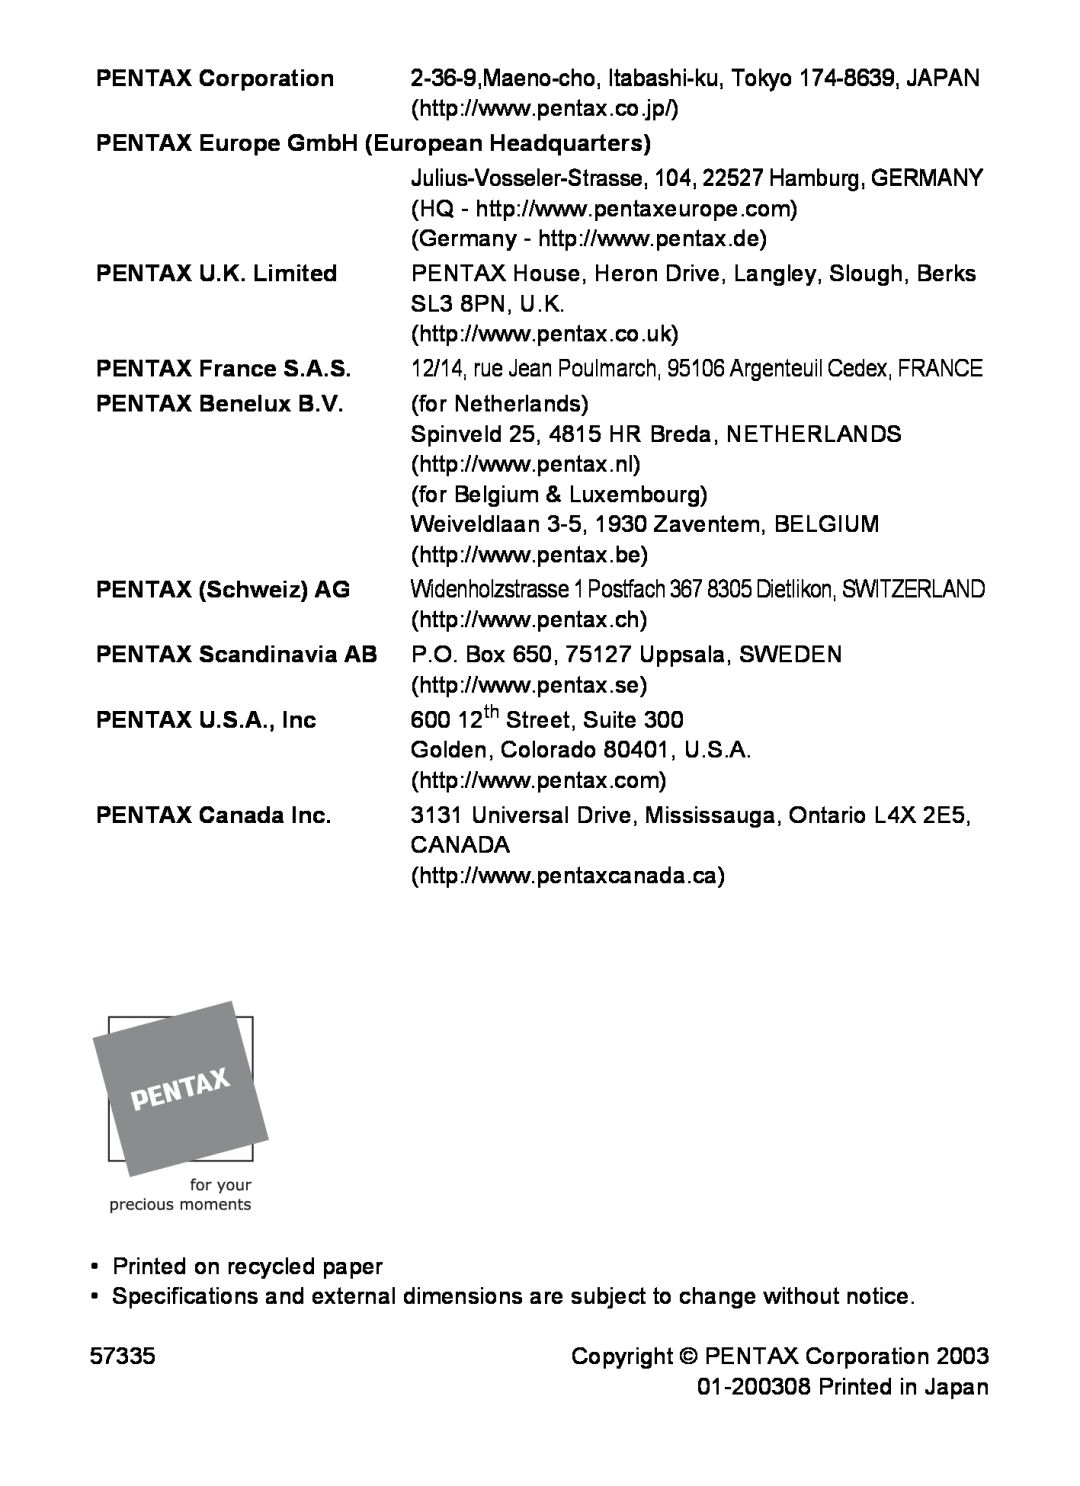 Pentax S4 manual PENTAX Europe GmbH European Headquarters, PENTAX Benelux B.V. for Netherlands 